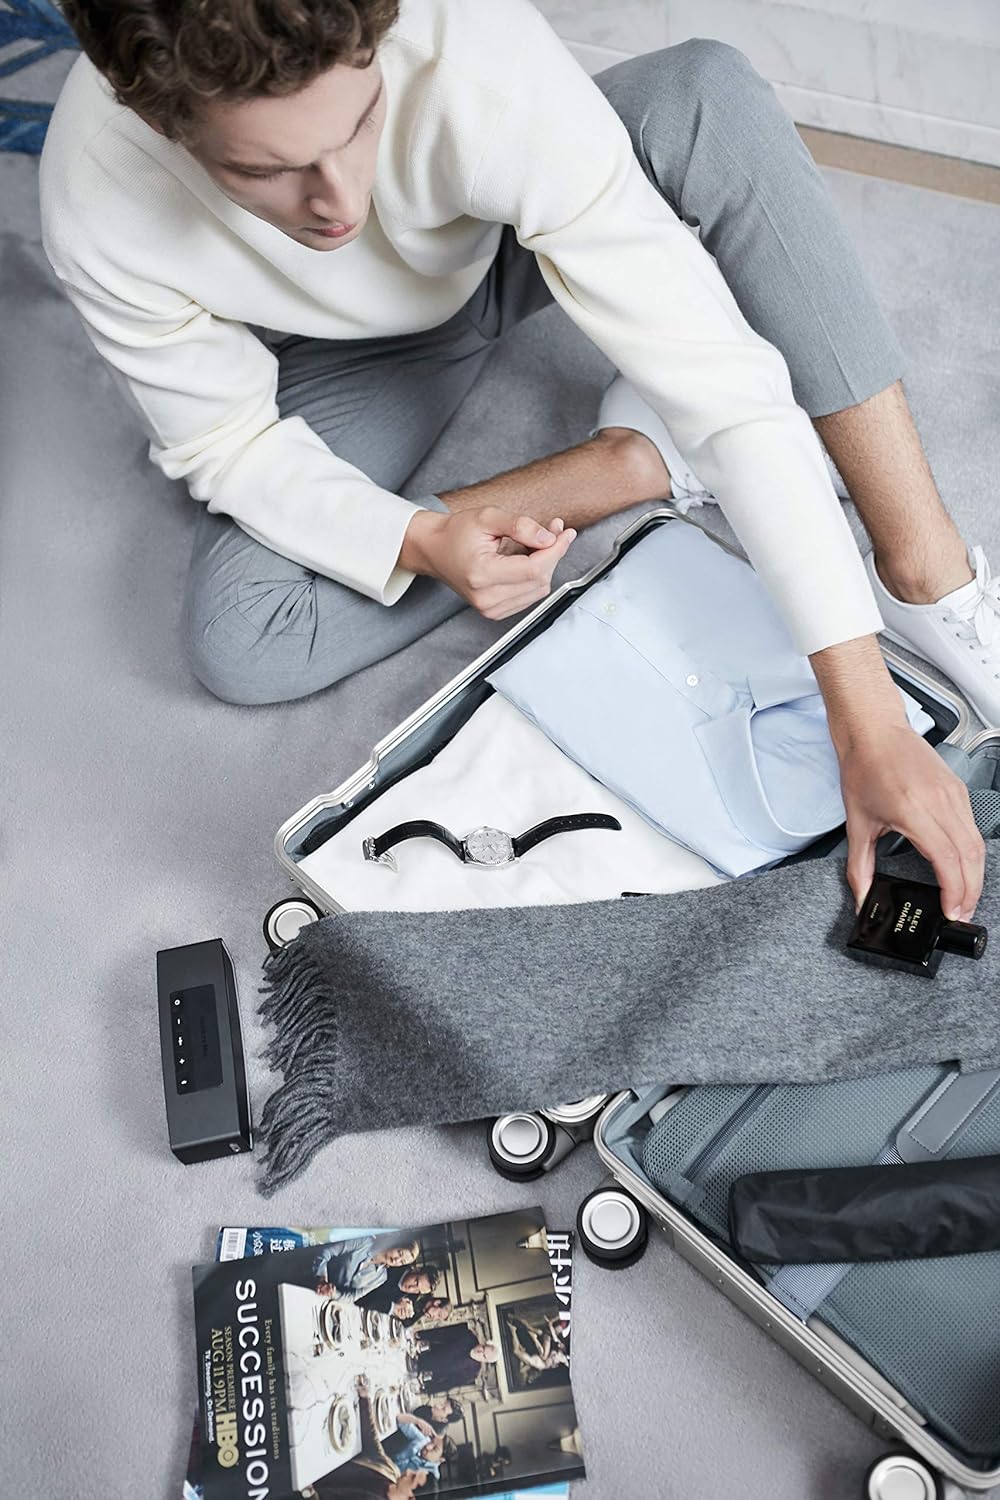 چمدان شیائومی مدل Xiaomi Metal Carry-on Luggage 20